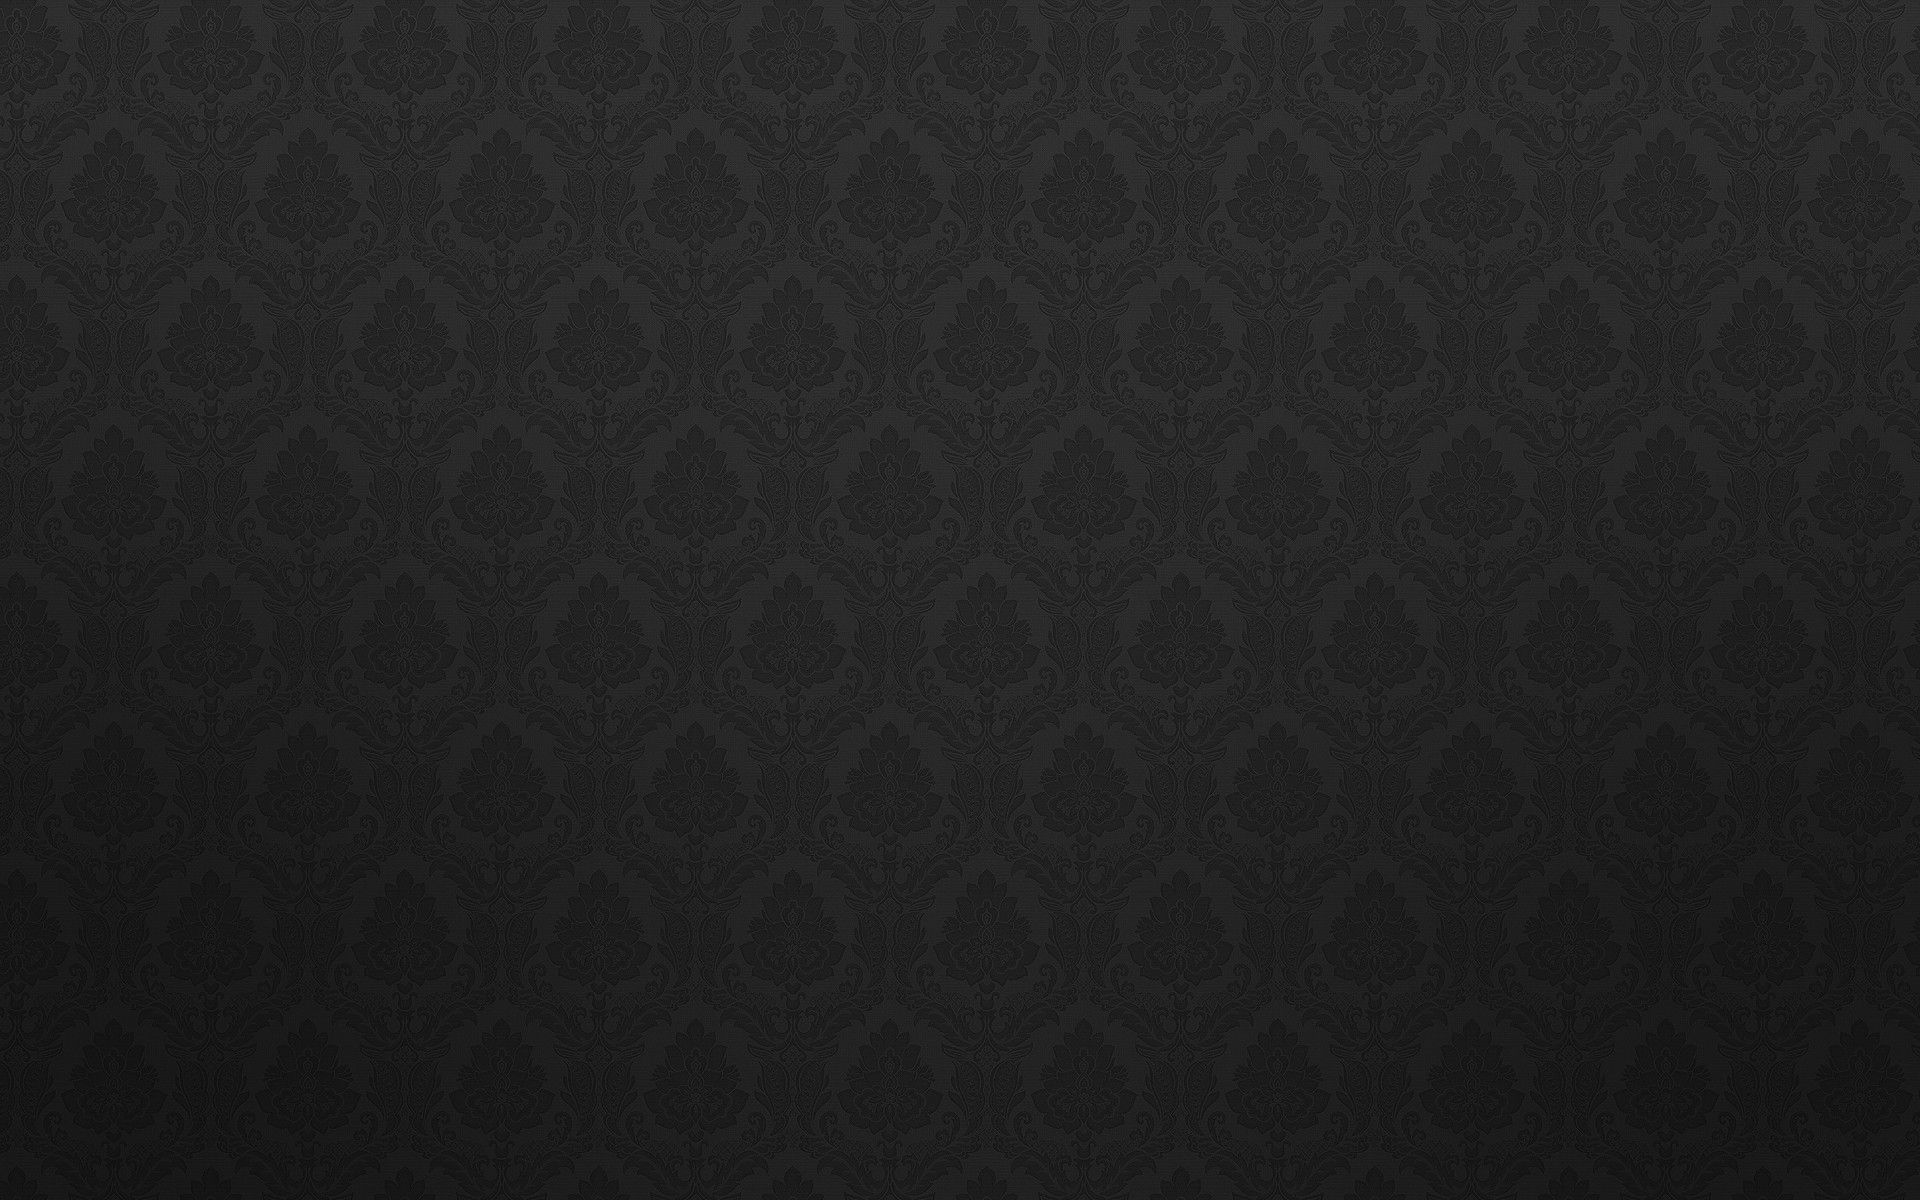 HD-wallpaper-Otife-Dark-black-plain-design-background.jpg - Yahara ...